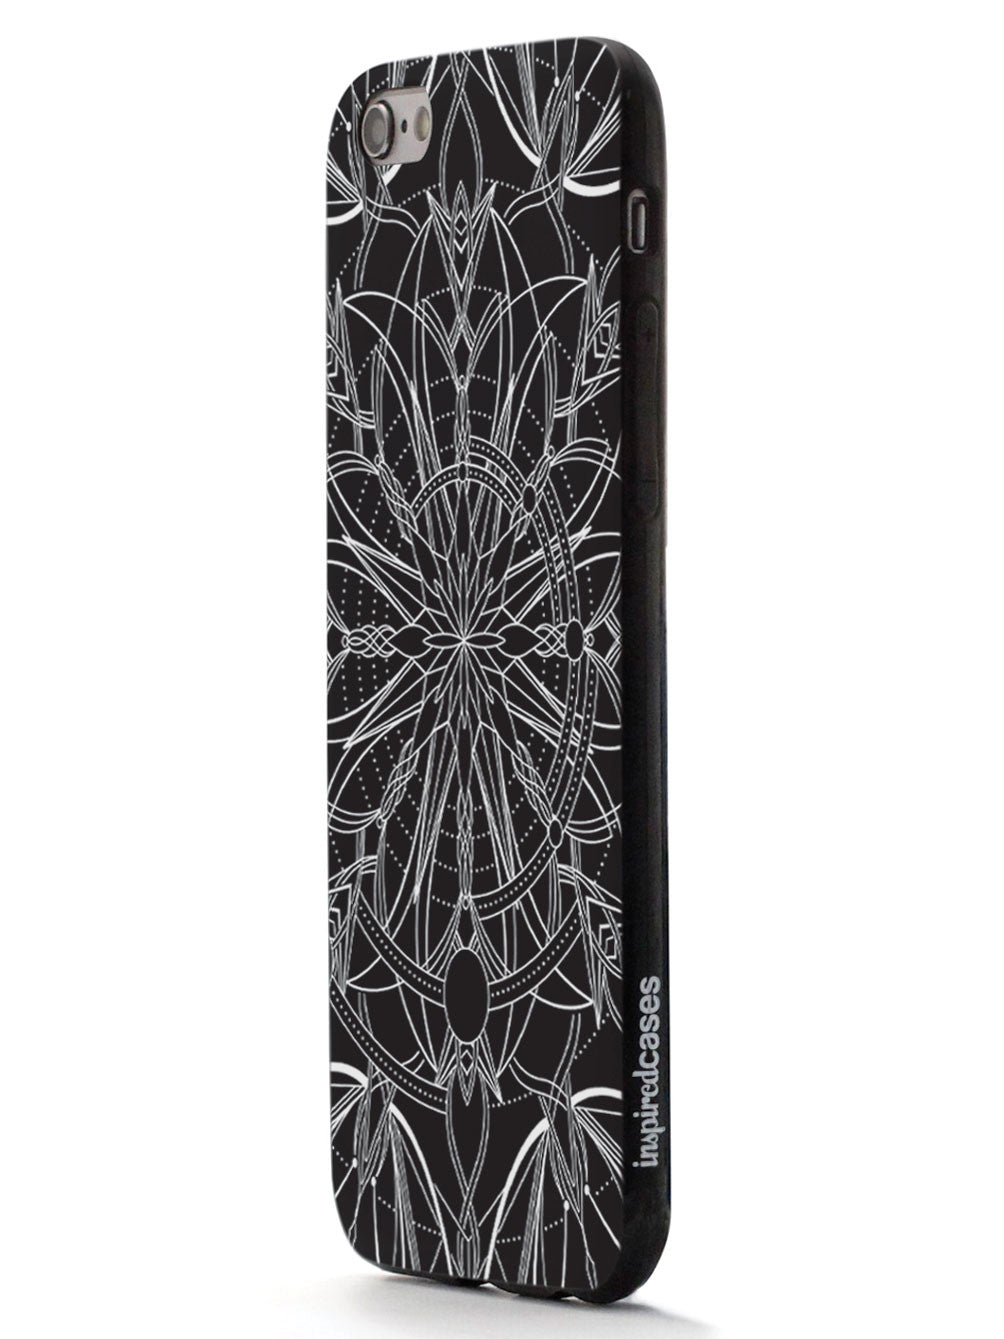 Intricate Mandala Line Art - Black Case